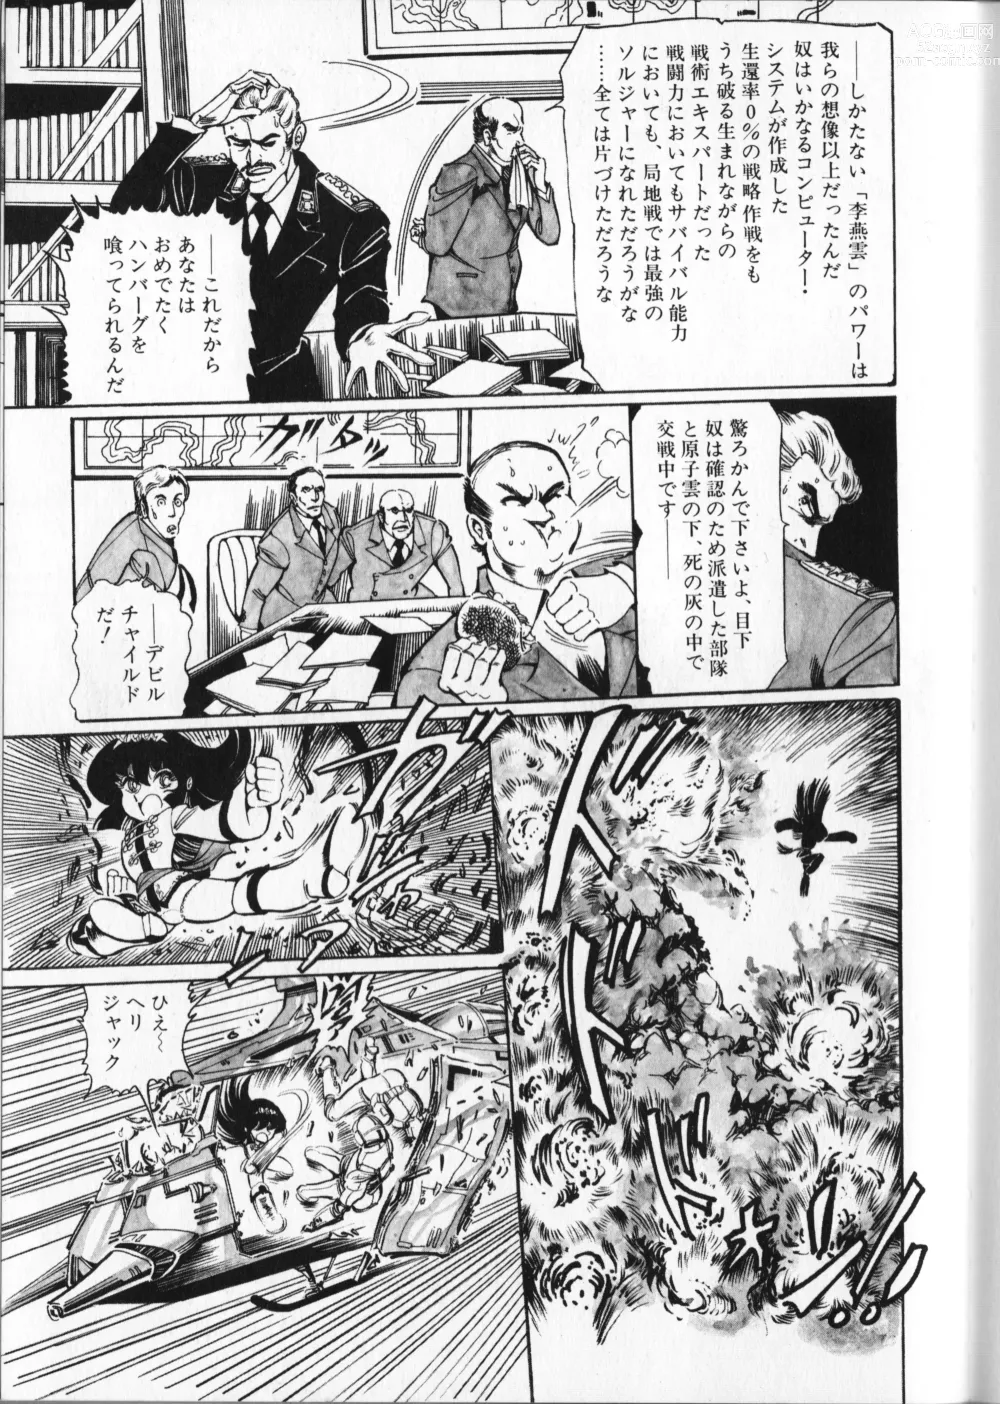 Page 177 of manga Gekisatsu! Uchuuken 5